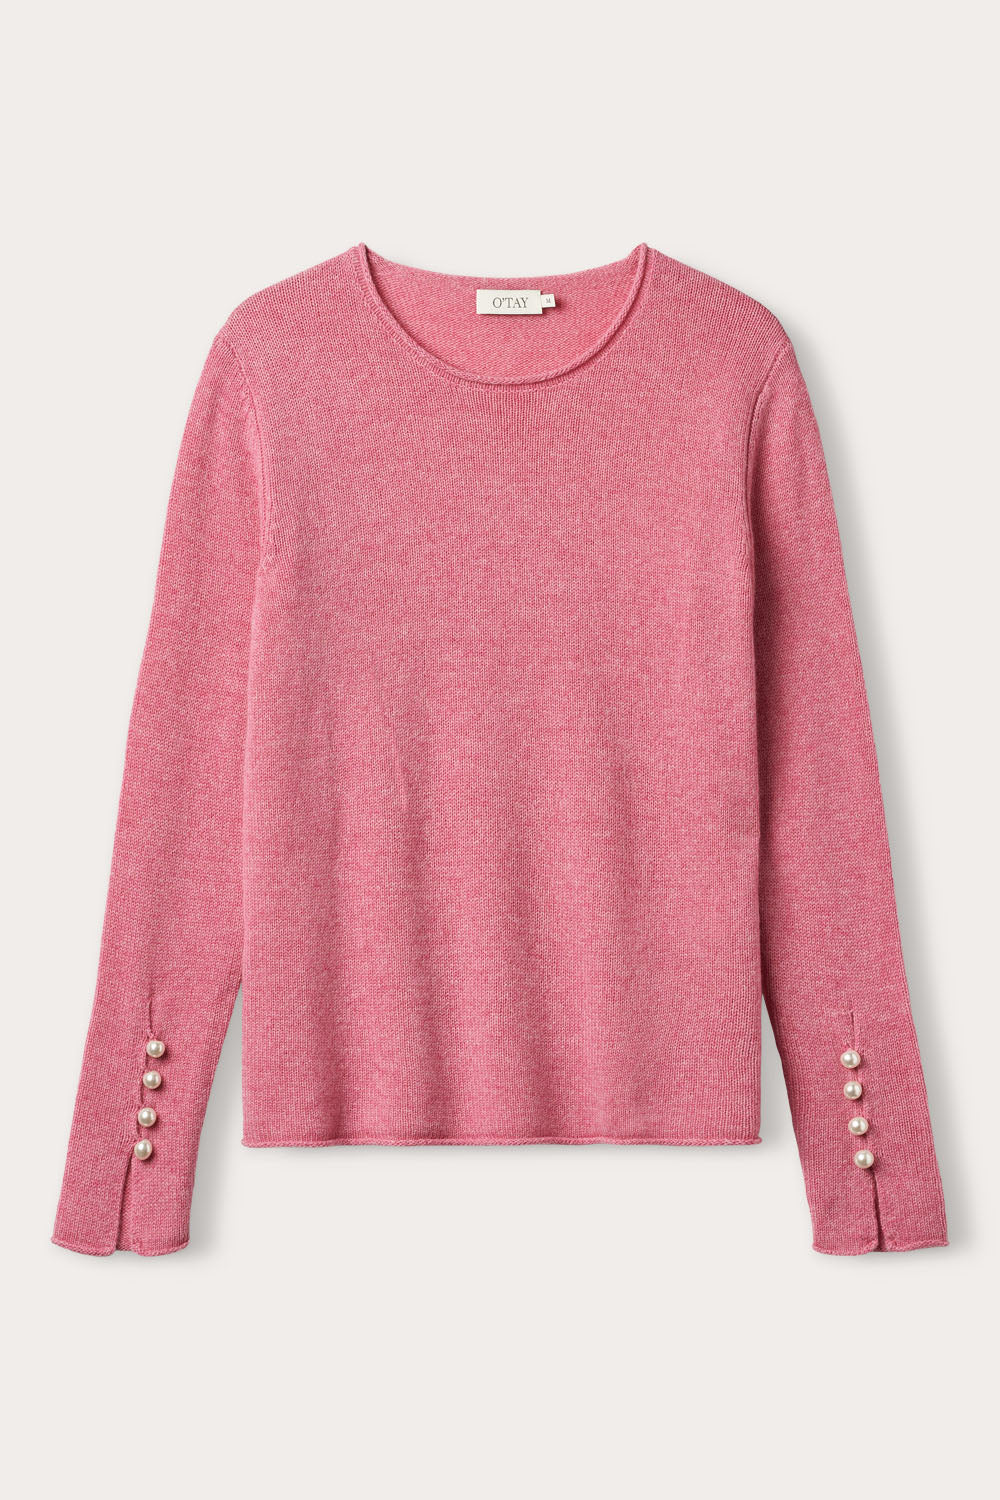 O'TAY Abbelone Sweater Bluser Pink Melange